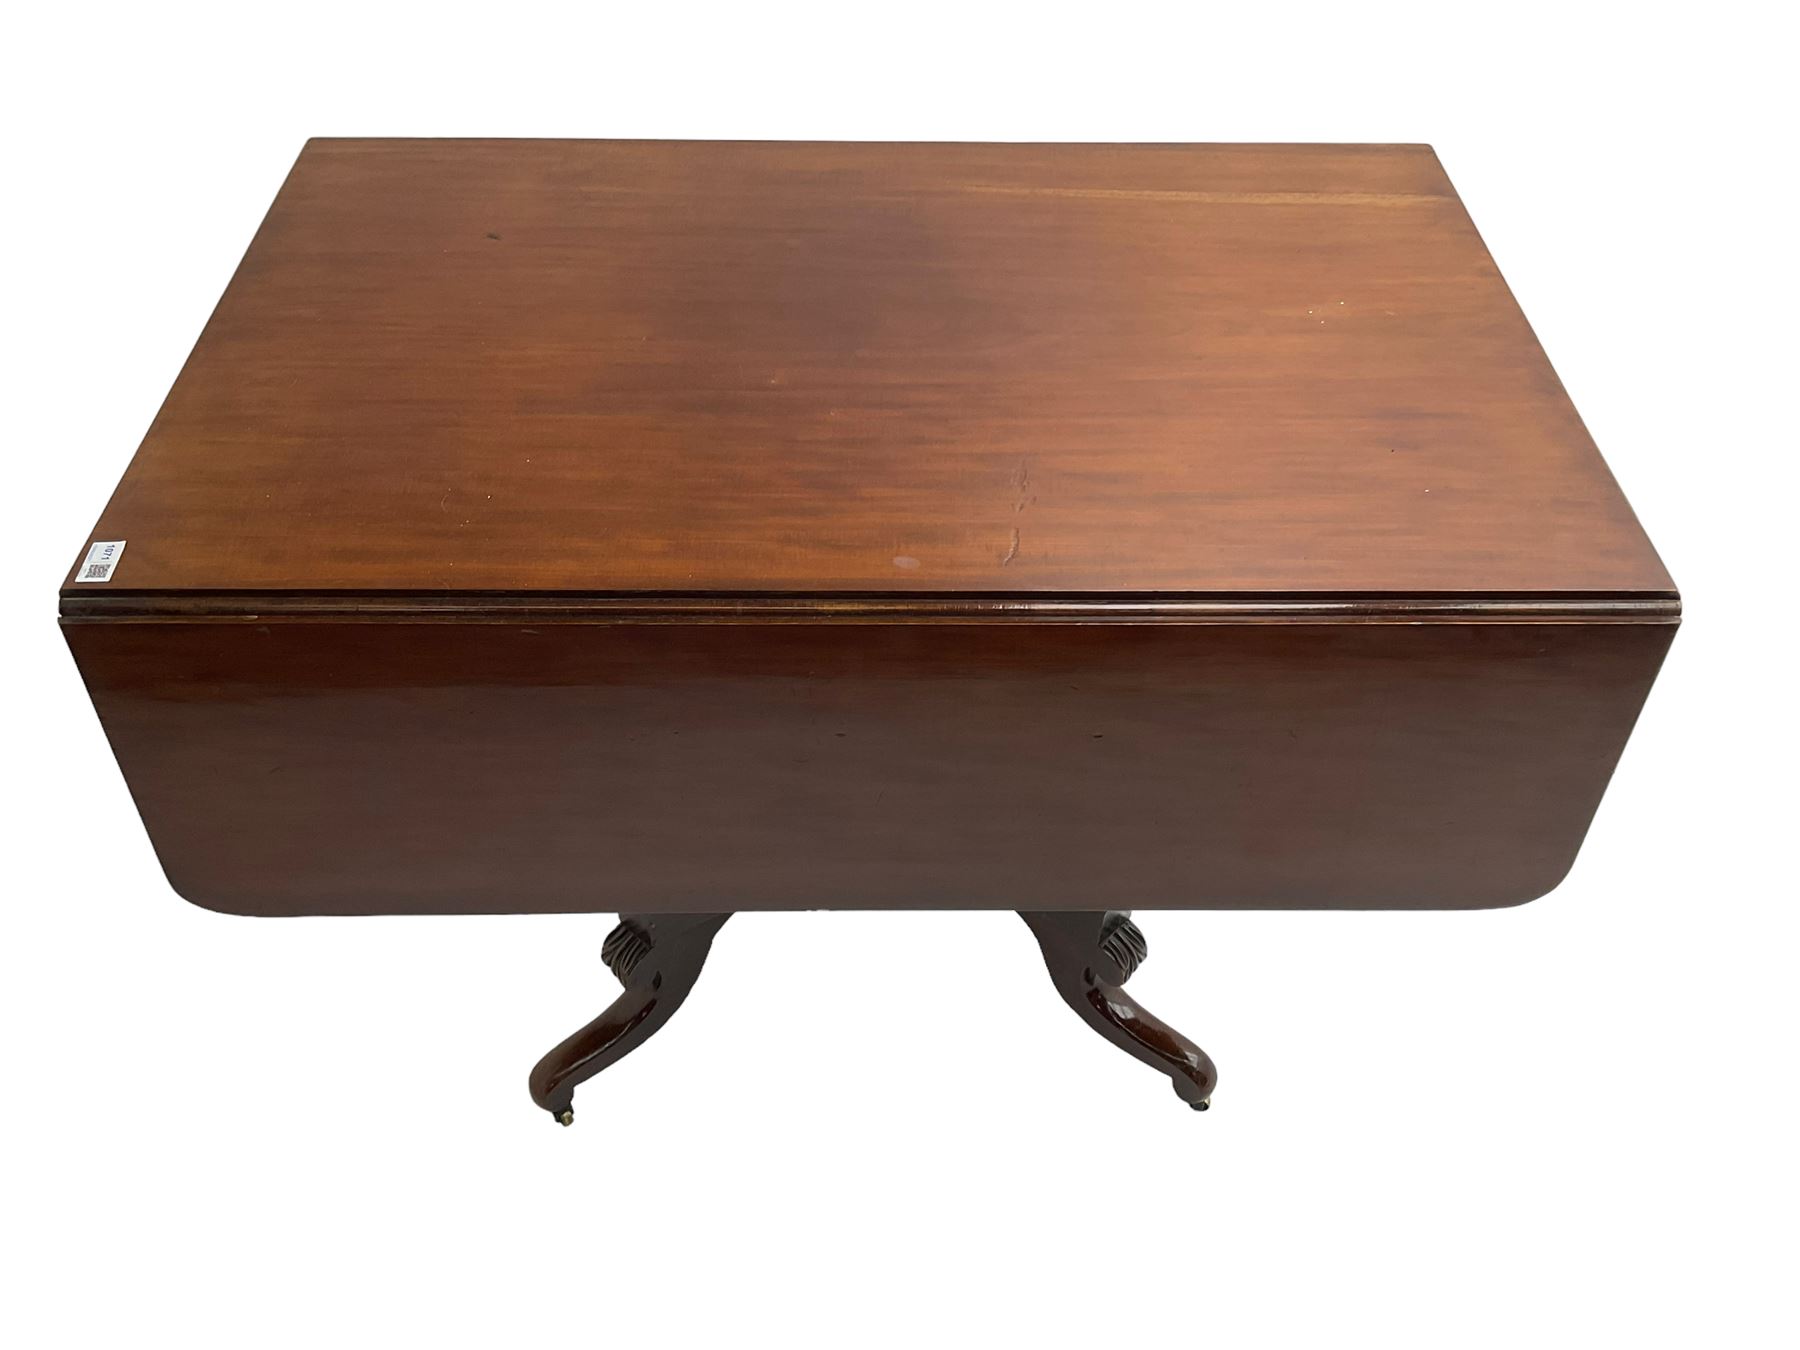 19th century mahogany drop leaf pedestal table - Image 5 of 7